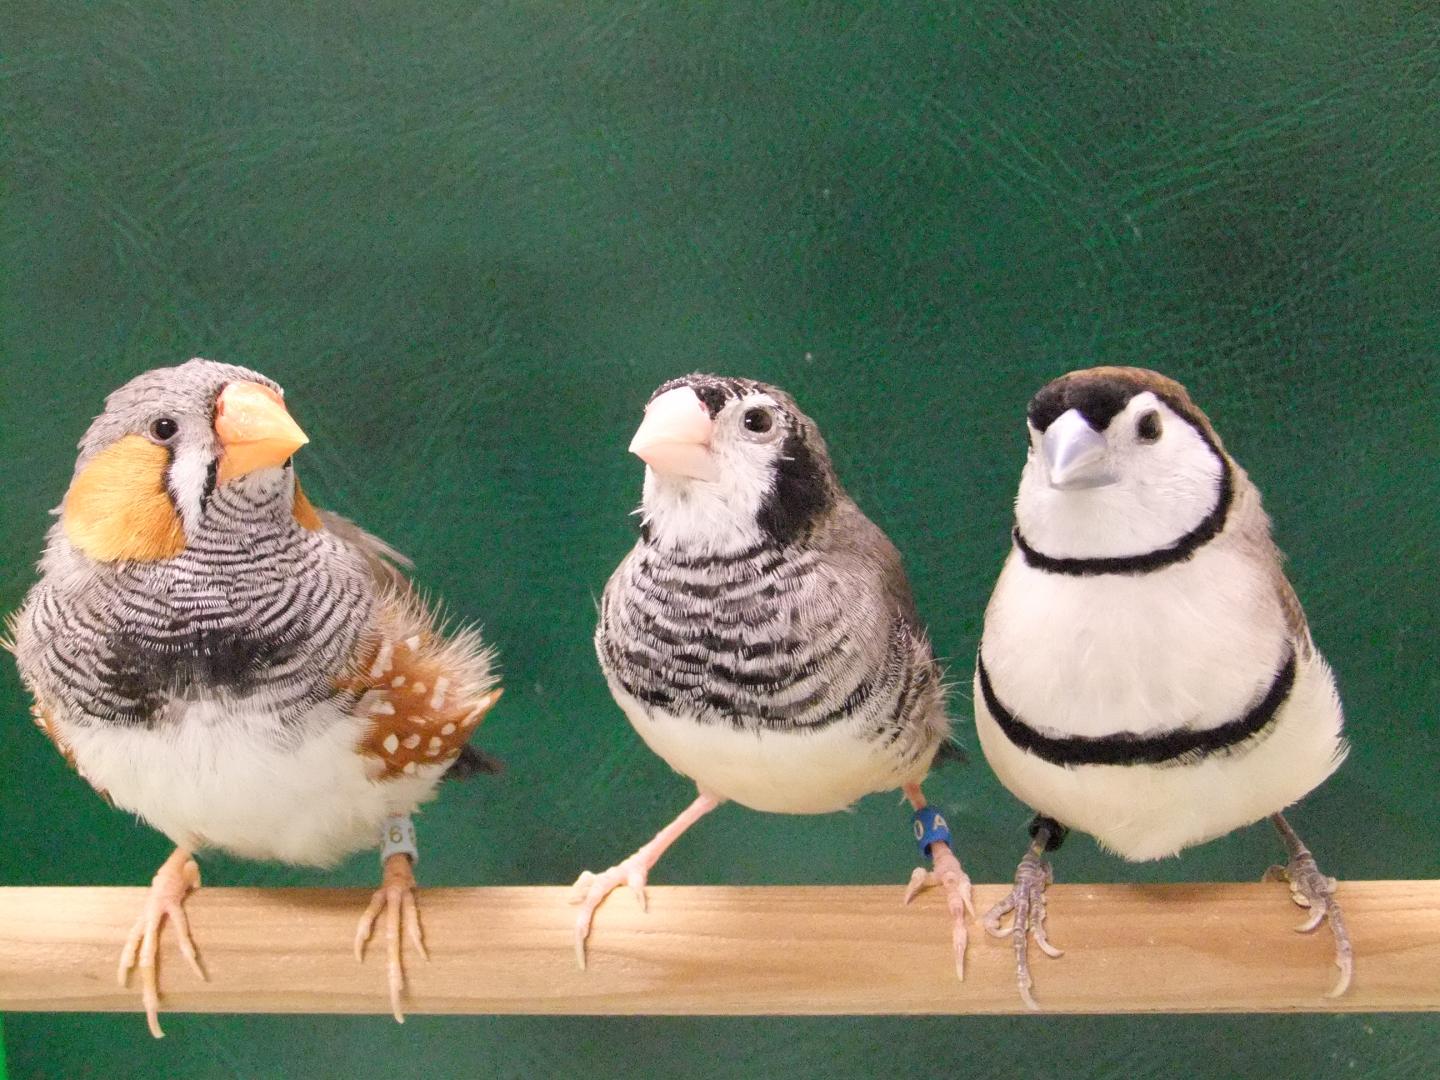 Songbirds Sing Species-Specific Songs